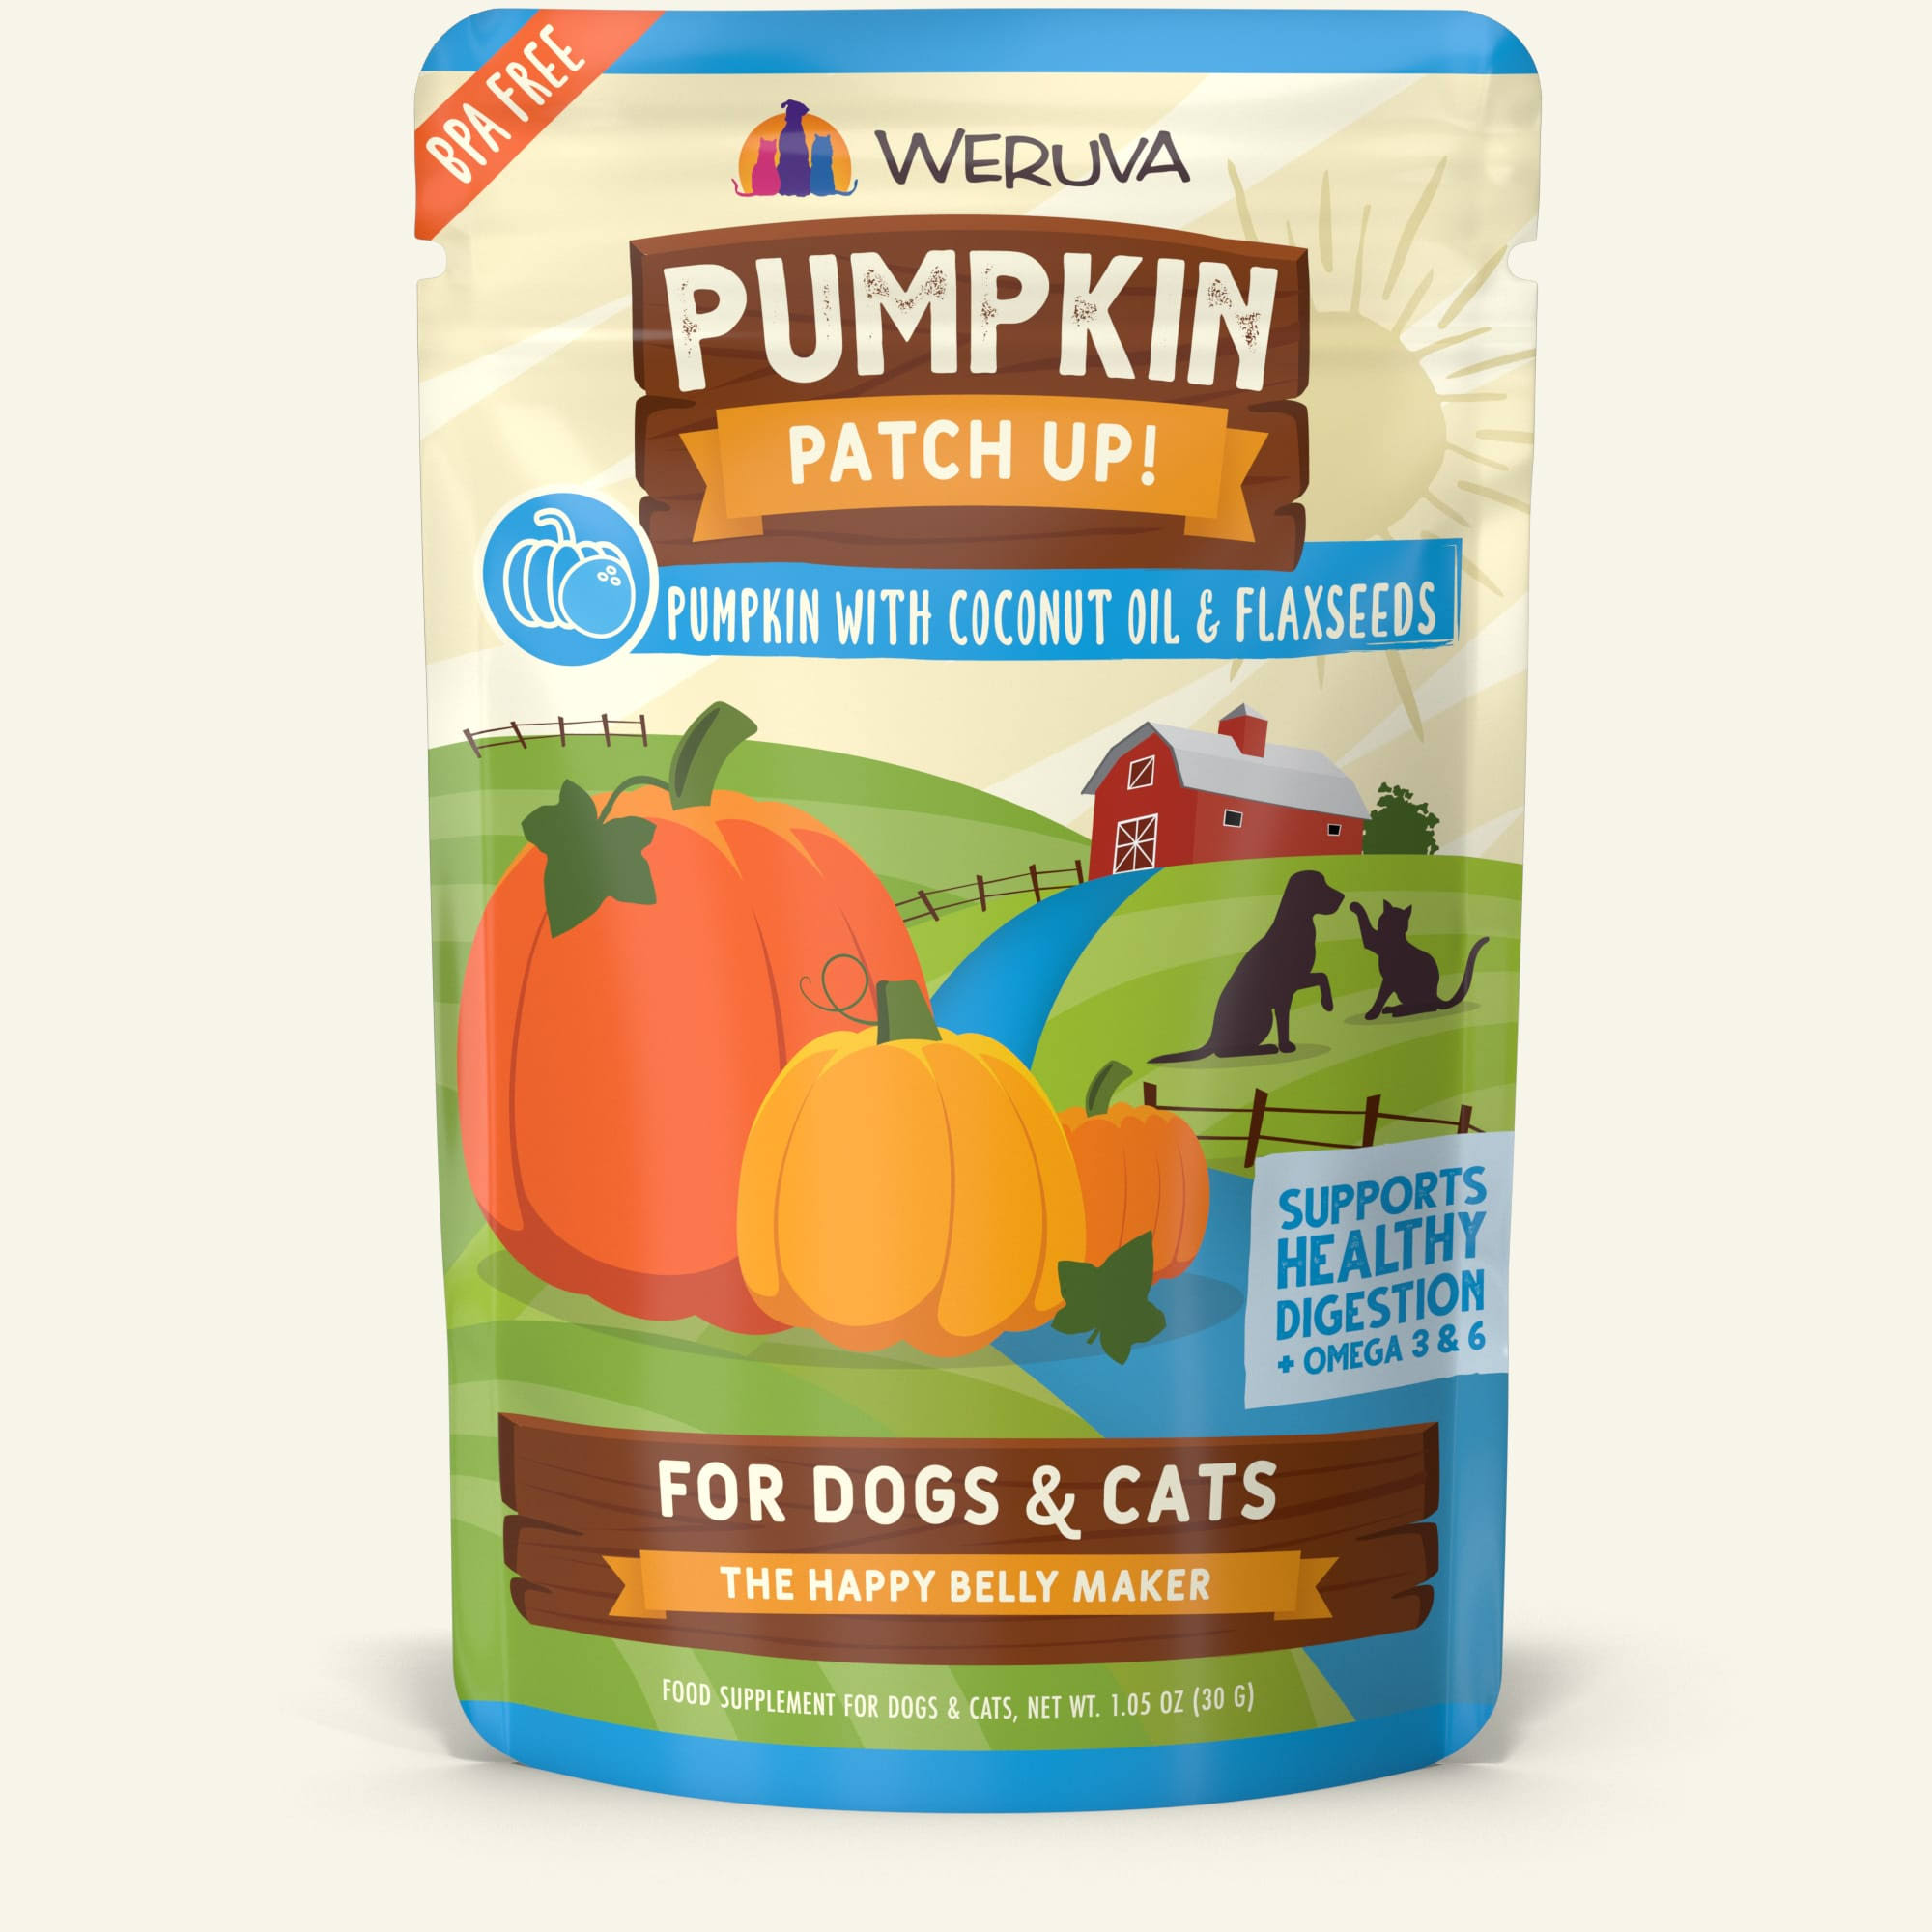 Weruva Pumpkin Patch Up! Pumpkin with Coconut Oil & Flaxseeds Dog & Cat Wet Food Supplement, 1.05-oz, Case of 12